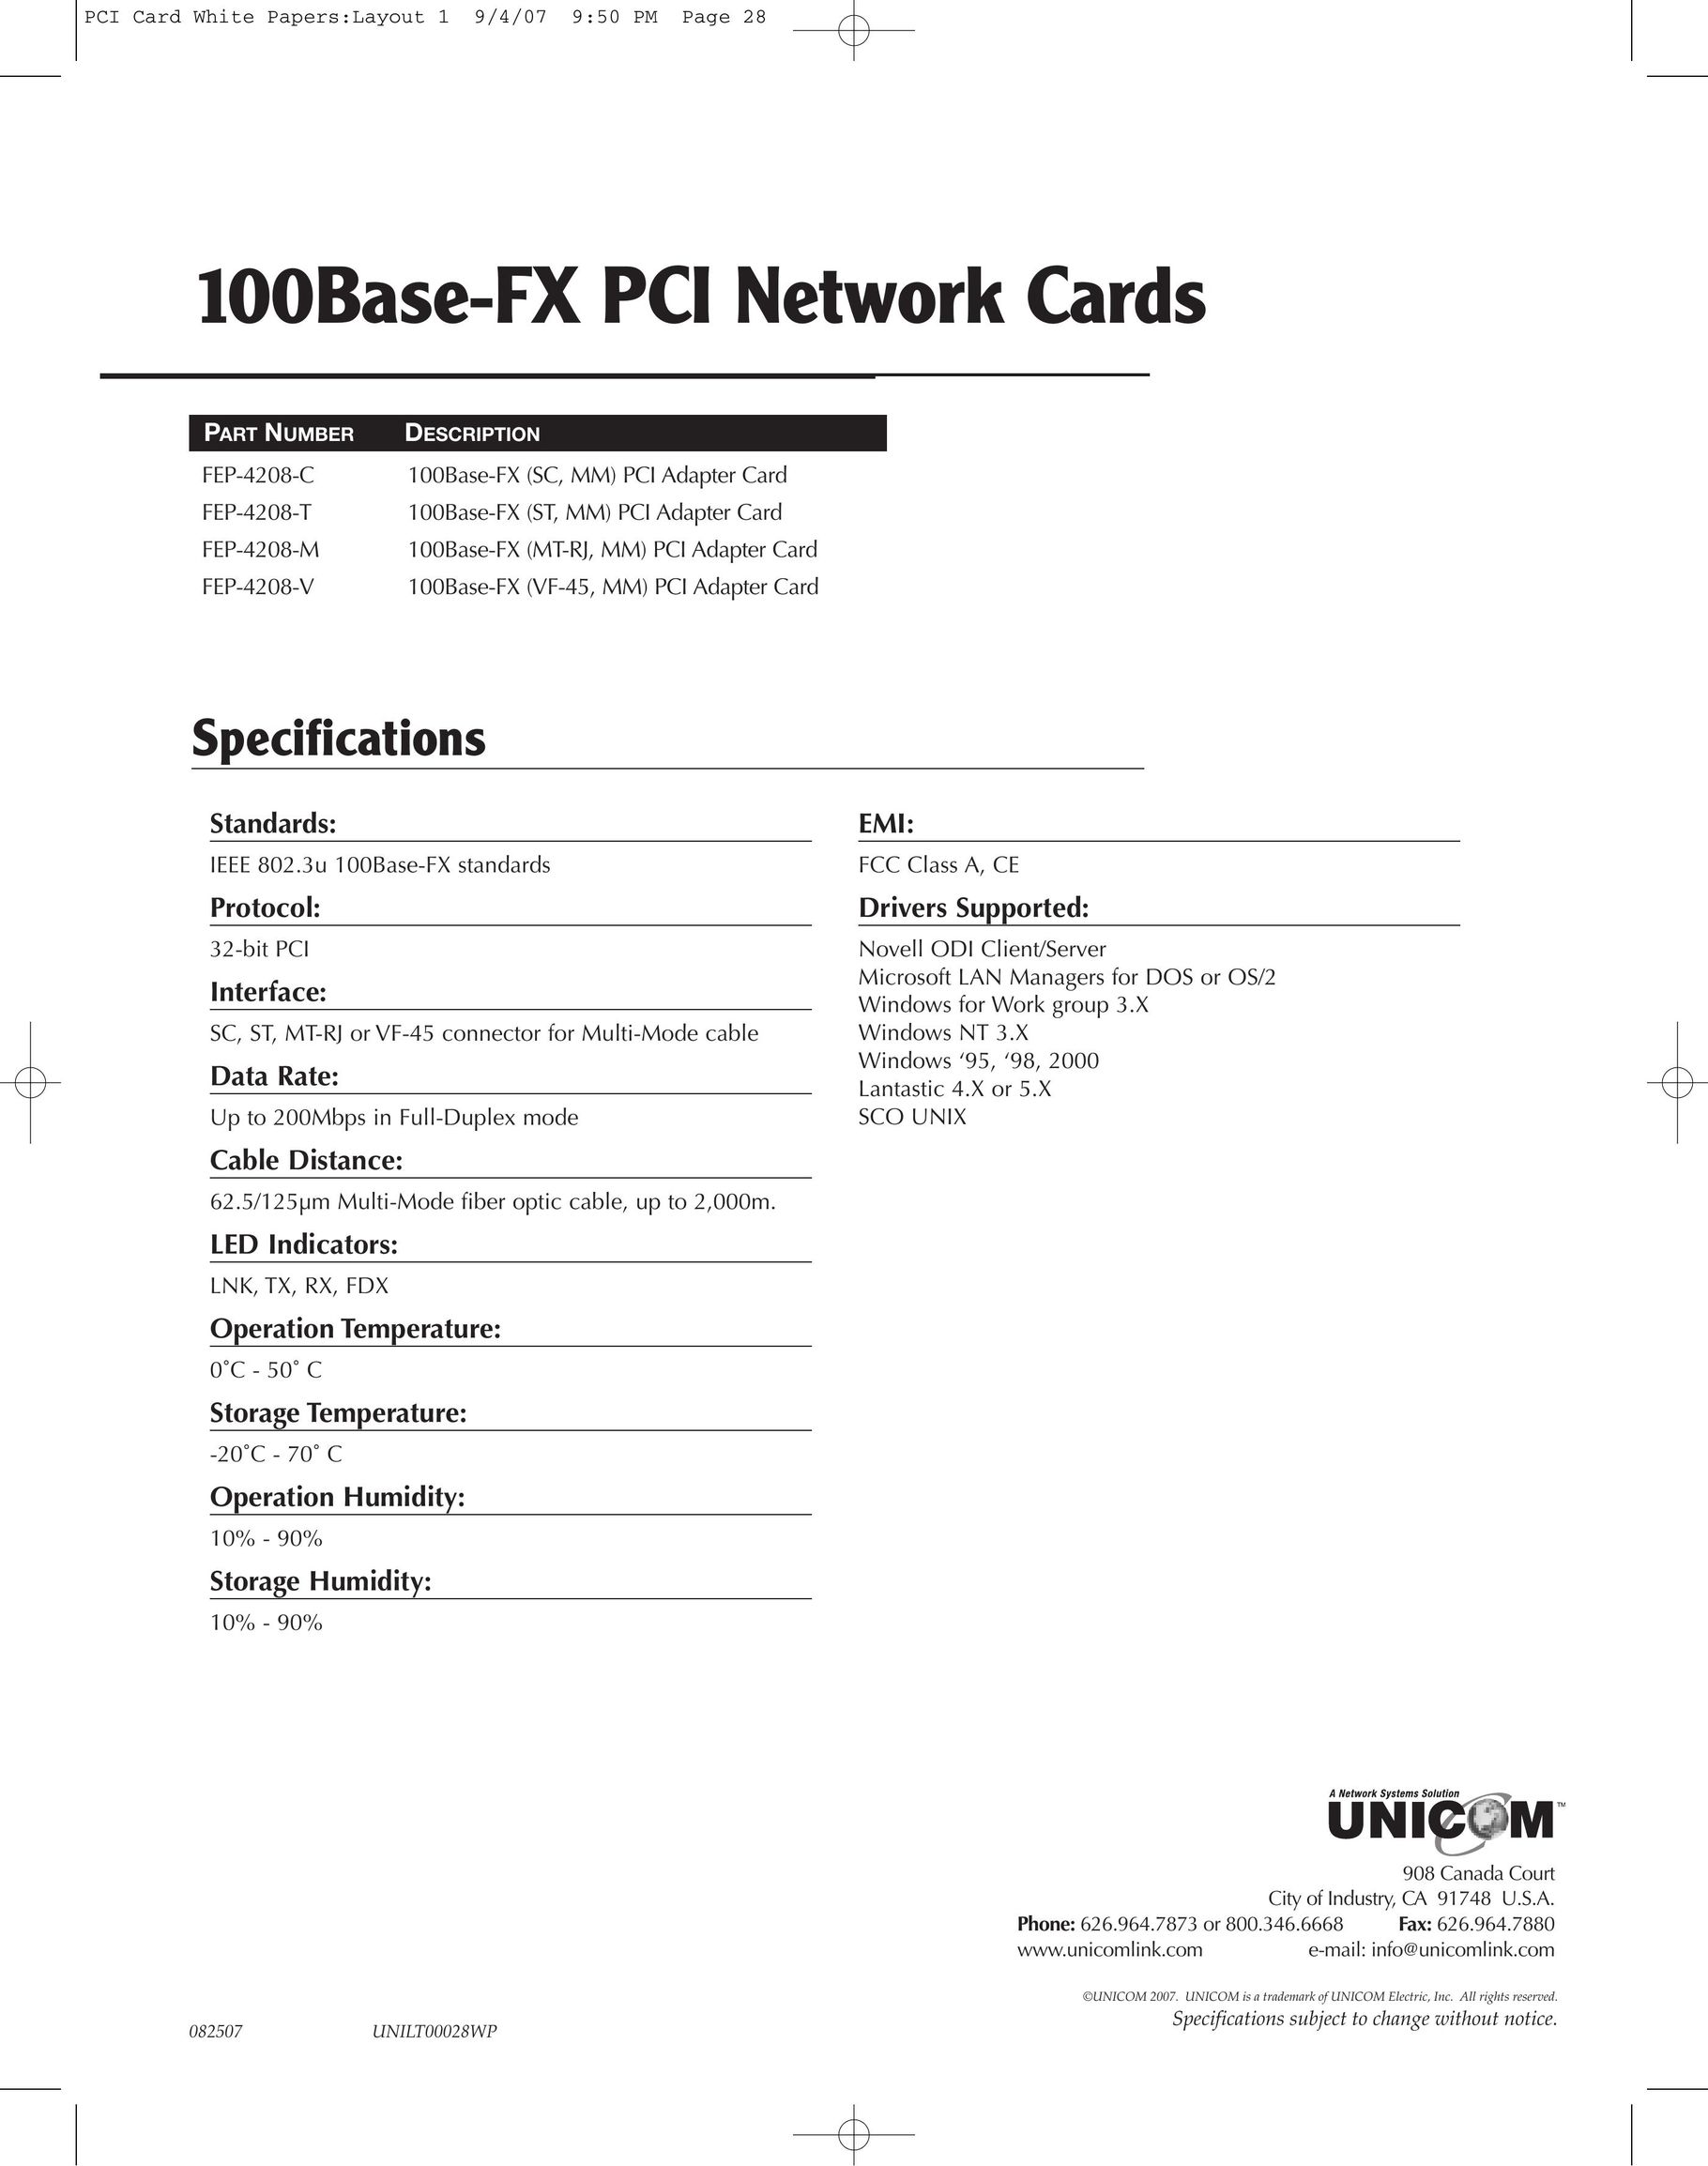 UNICOM Electric FEP-4208-T Network Card User Manual